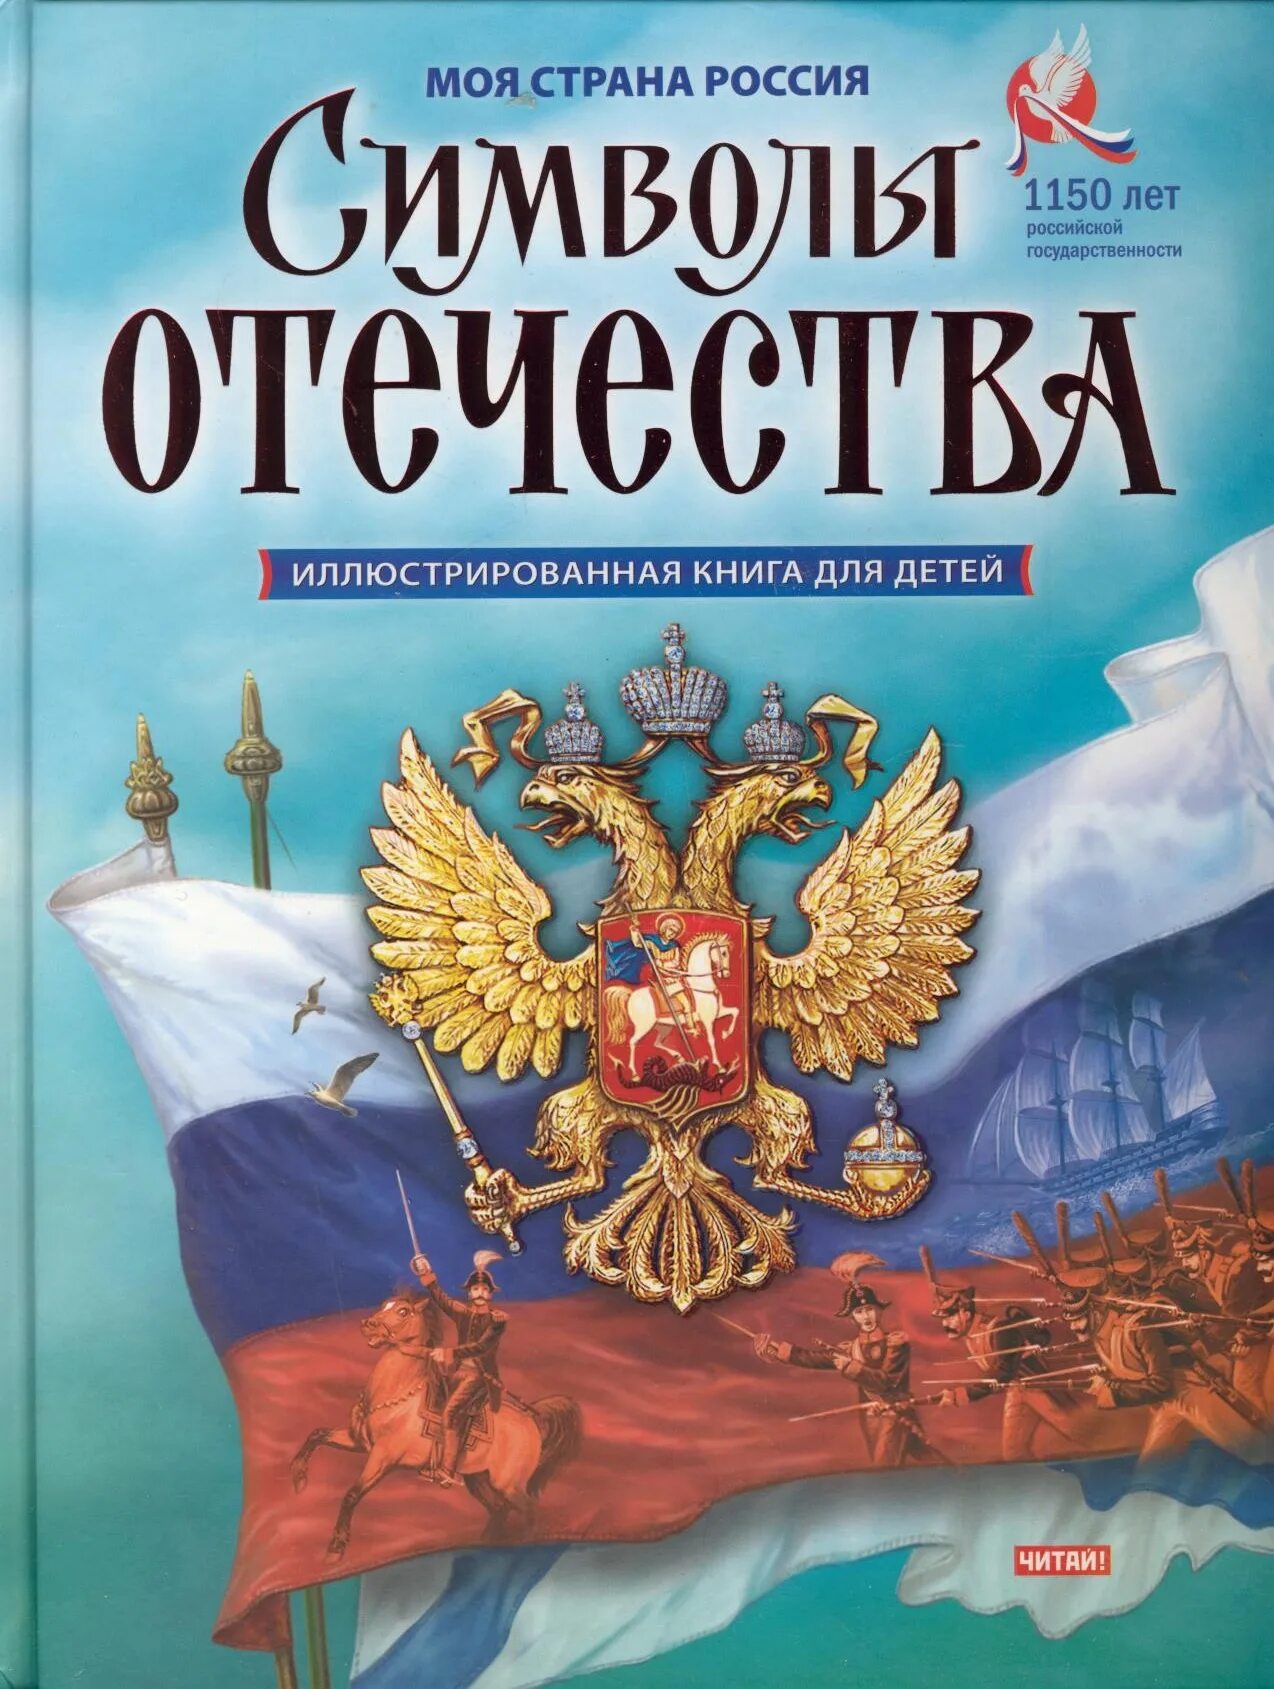 Книги истории отечества